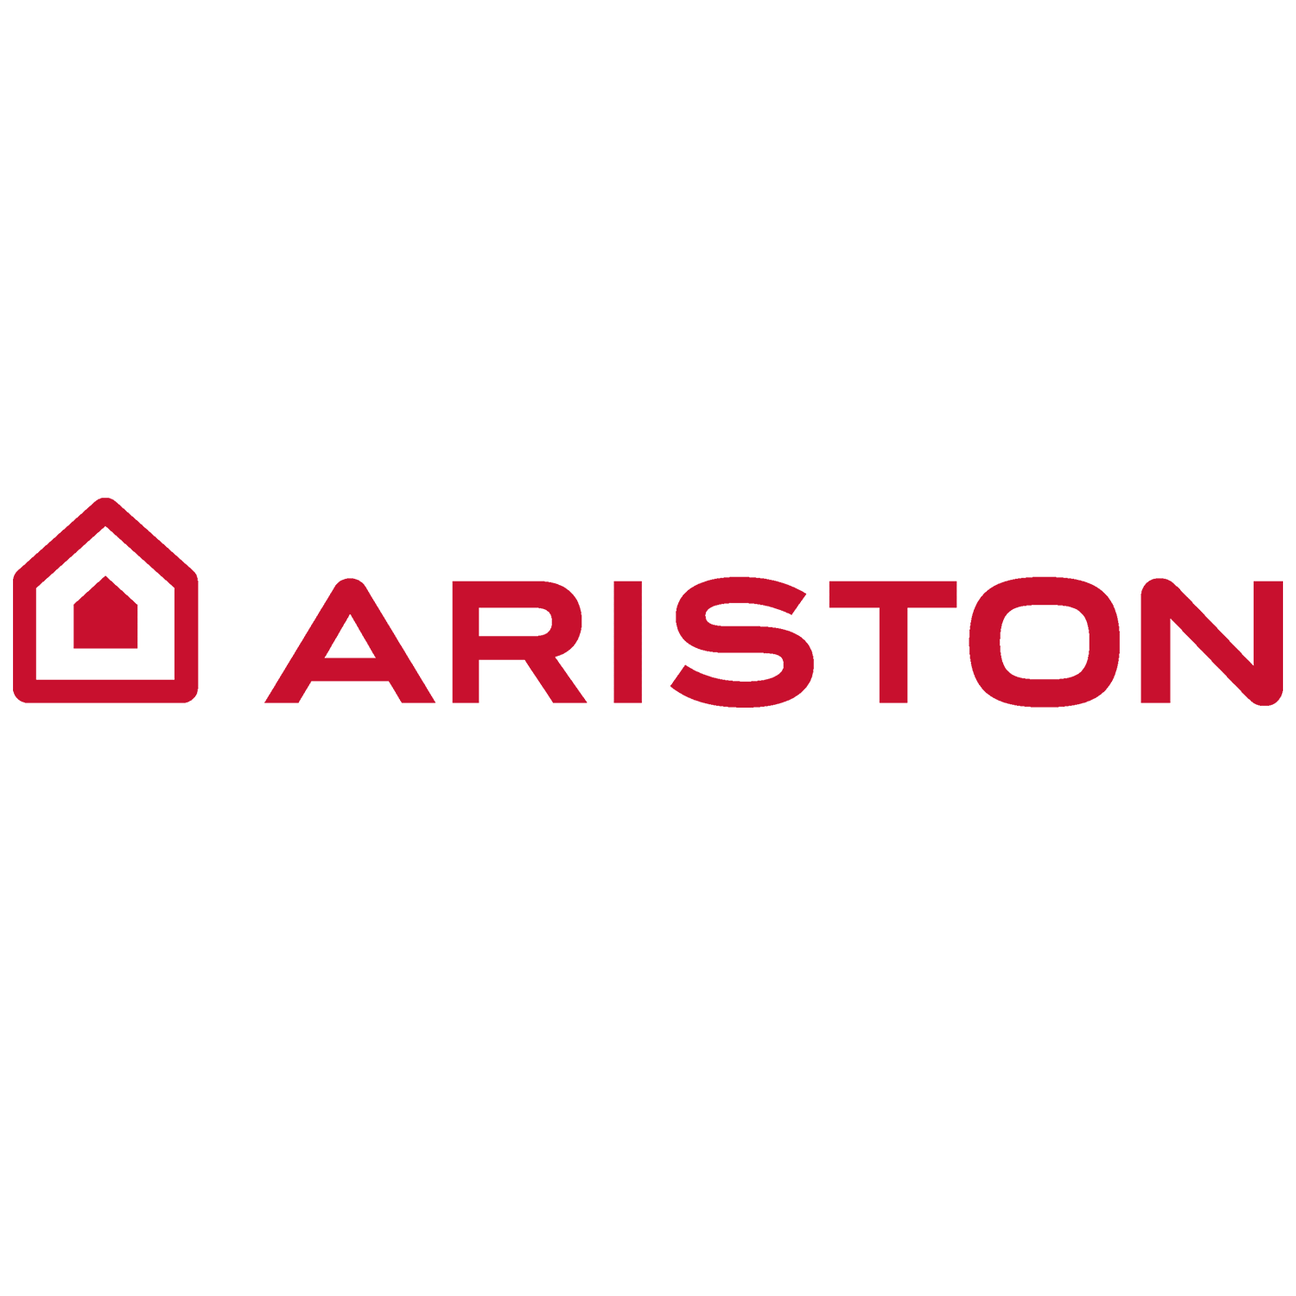 Ariston - My Oven Spares